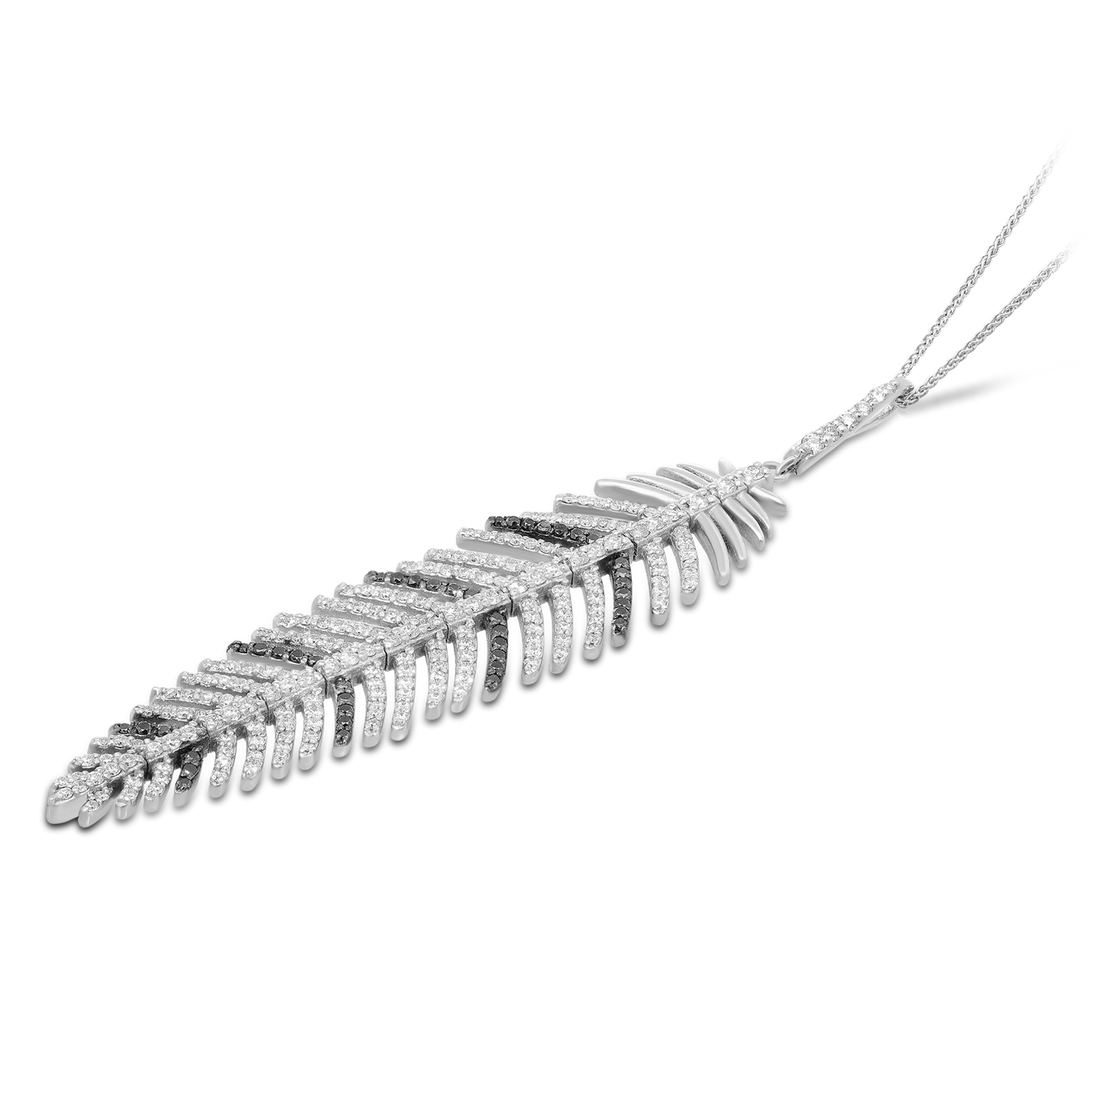 White and Black Diamond Feather Pendant Necklace - 1.3 Carat